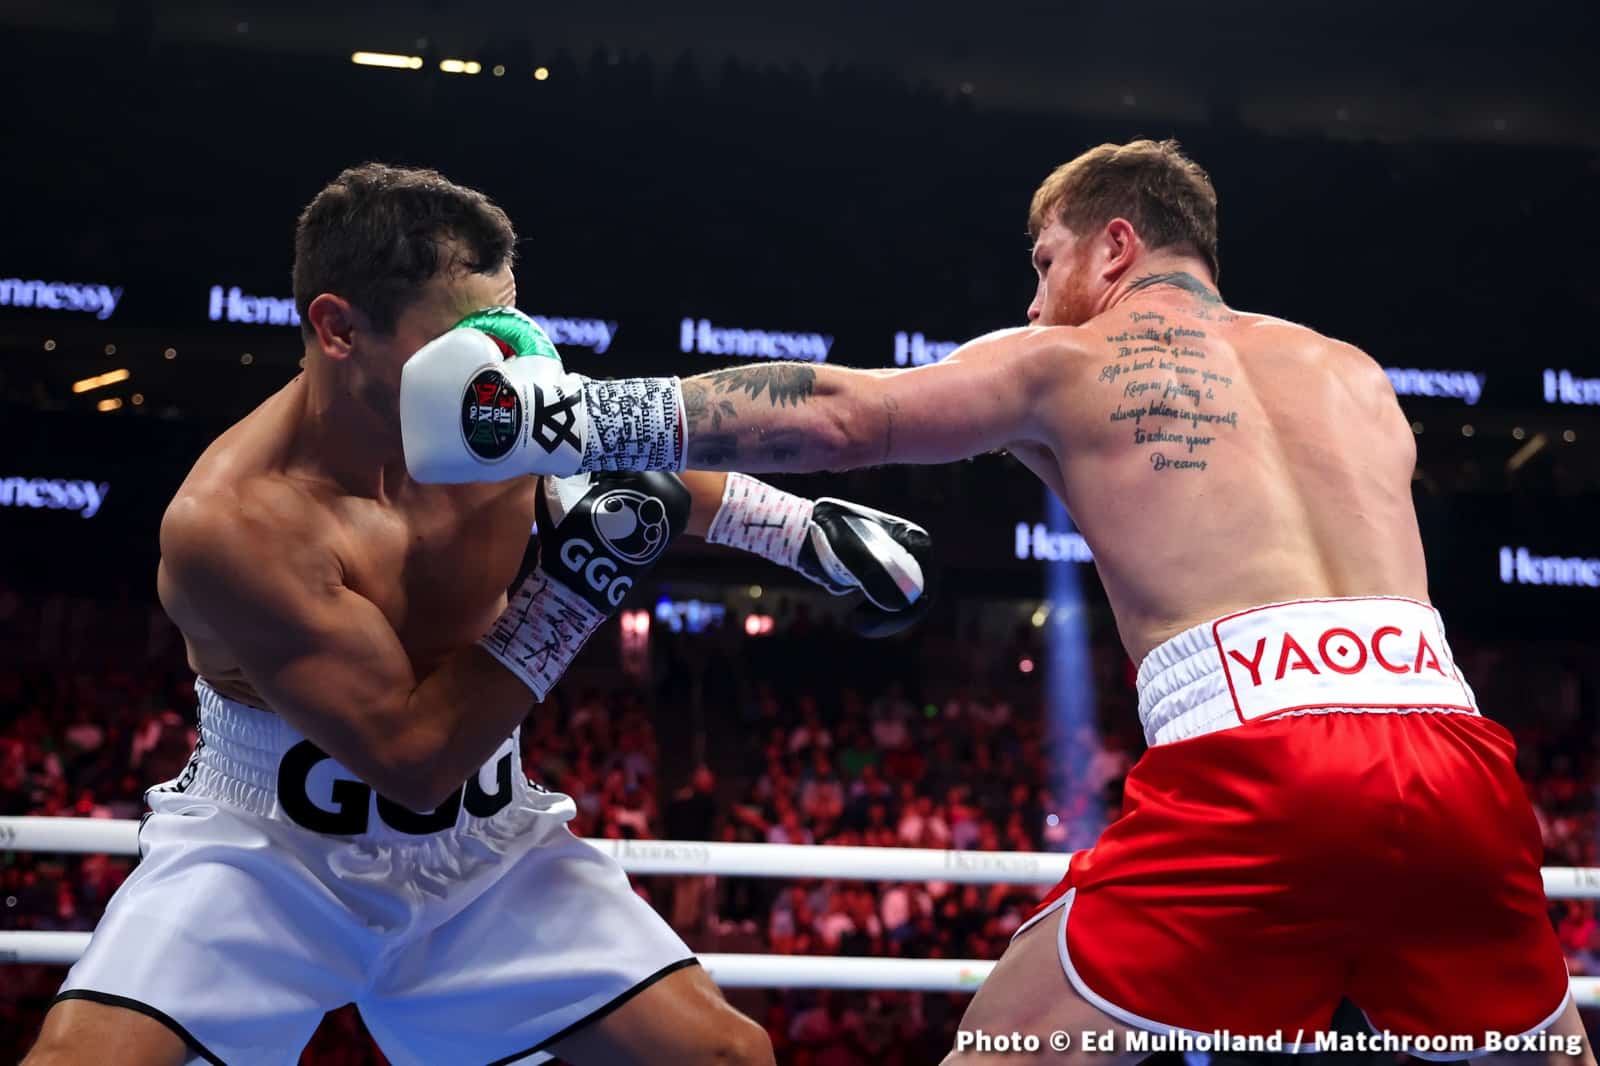 Canelo Alvarez vs. Gennadiy Golovkin - live action results for trilogy fight